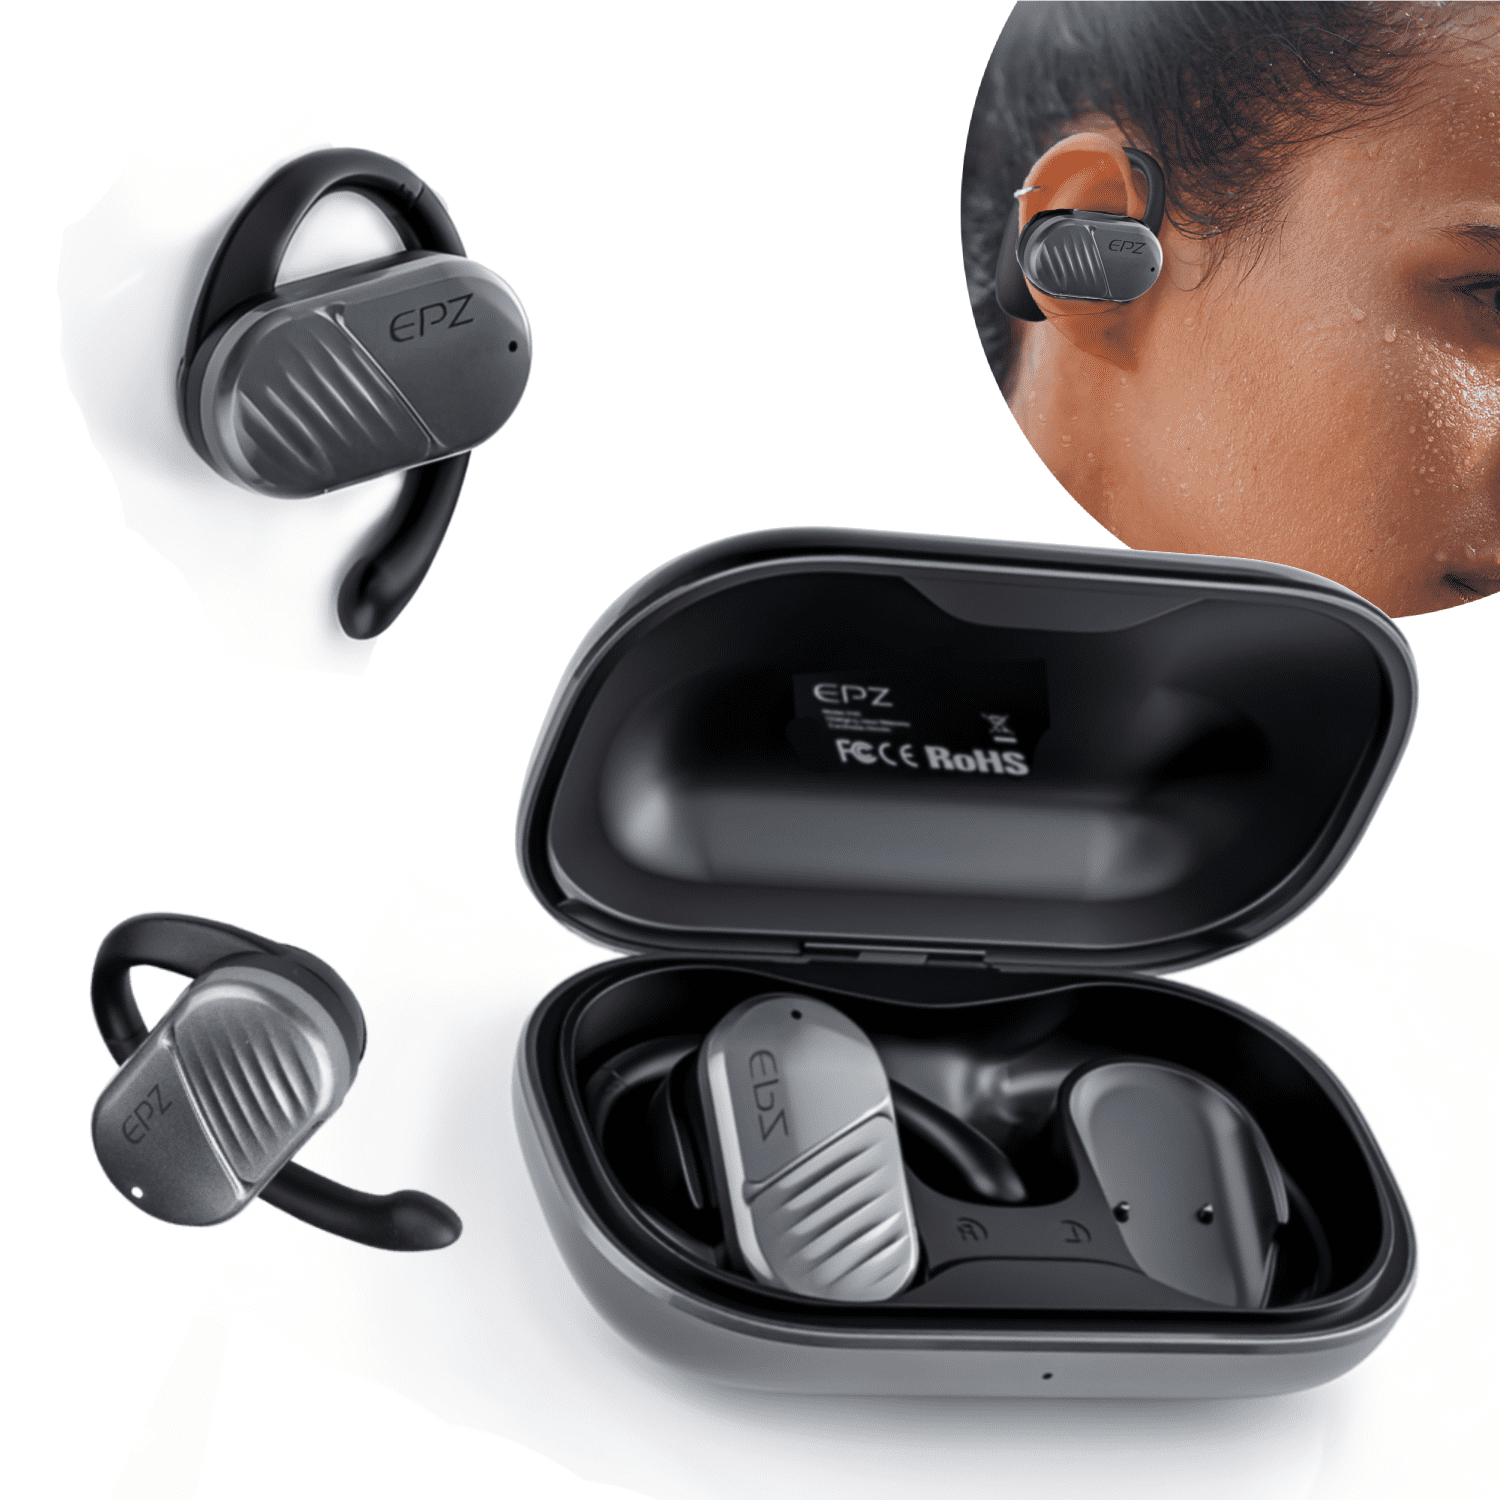 Power Your Workouts With Soundcore's AeroFit Open-Ear Headphones